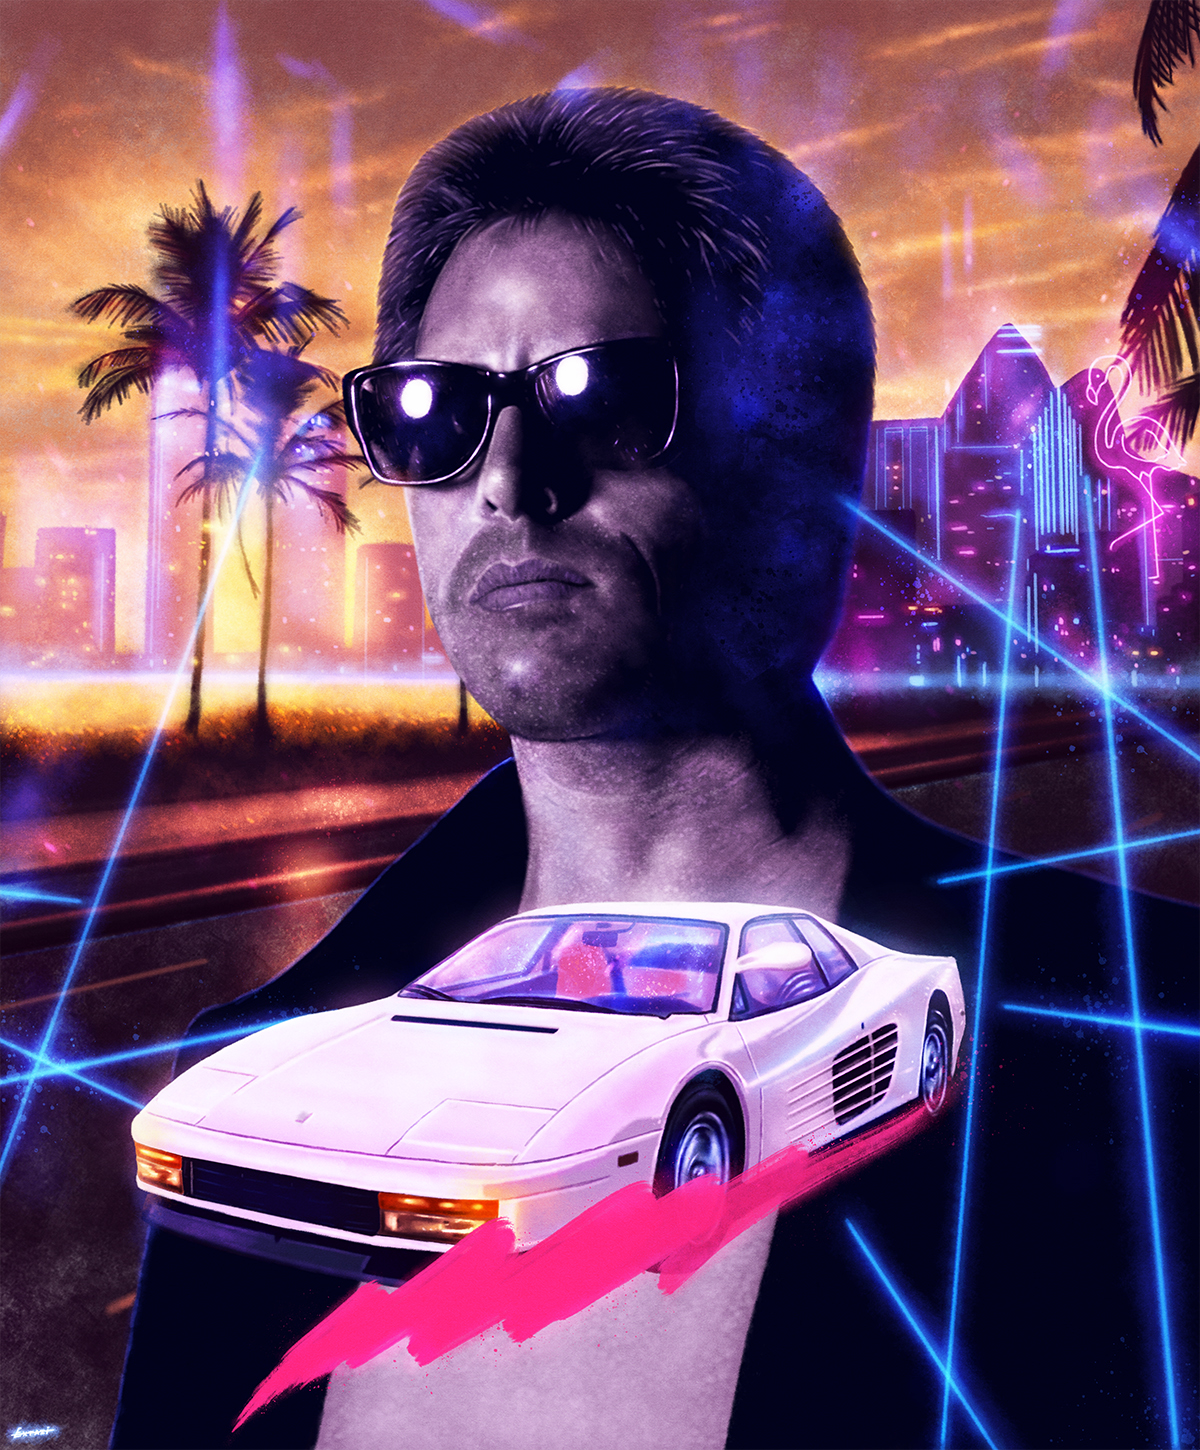 Miami Vice – Sonny Crockett